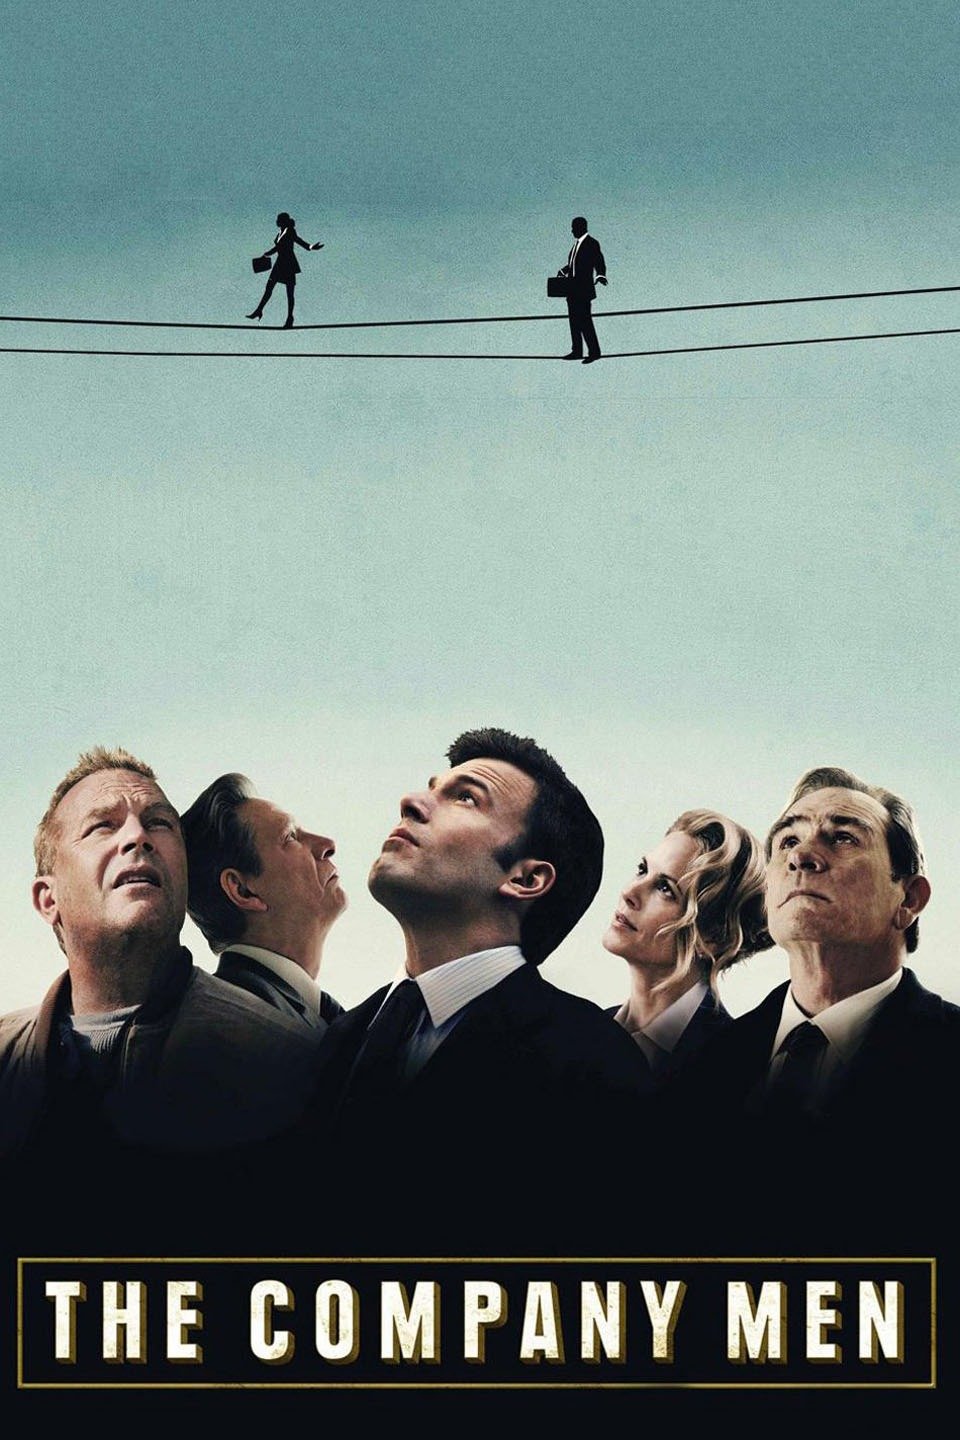 The Company Men [HD] (2010)